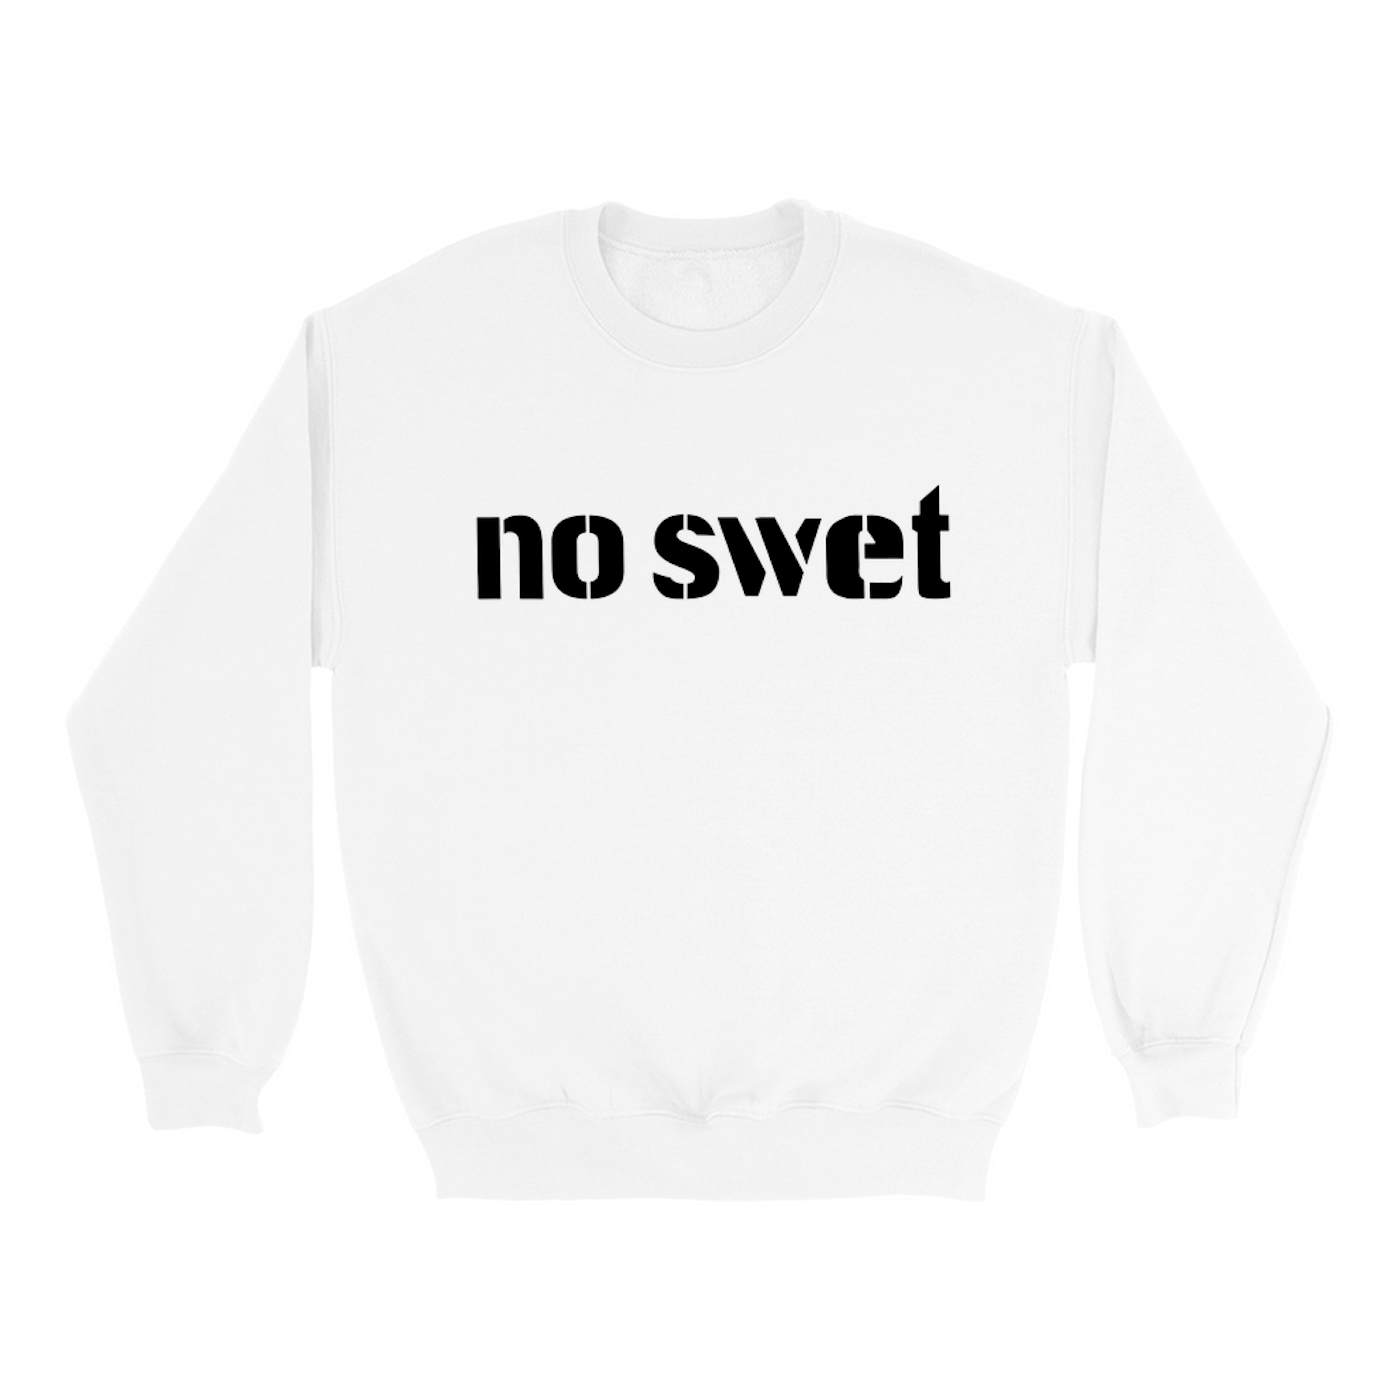 Diana Ross Sweatshirt | No Swet Worn By Diana Ross Diana Ross Sweatshirt